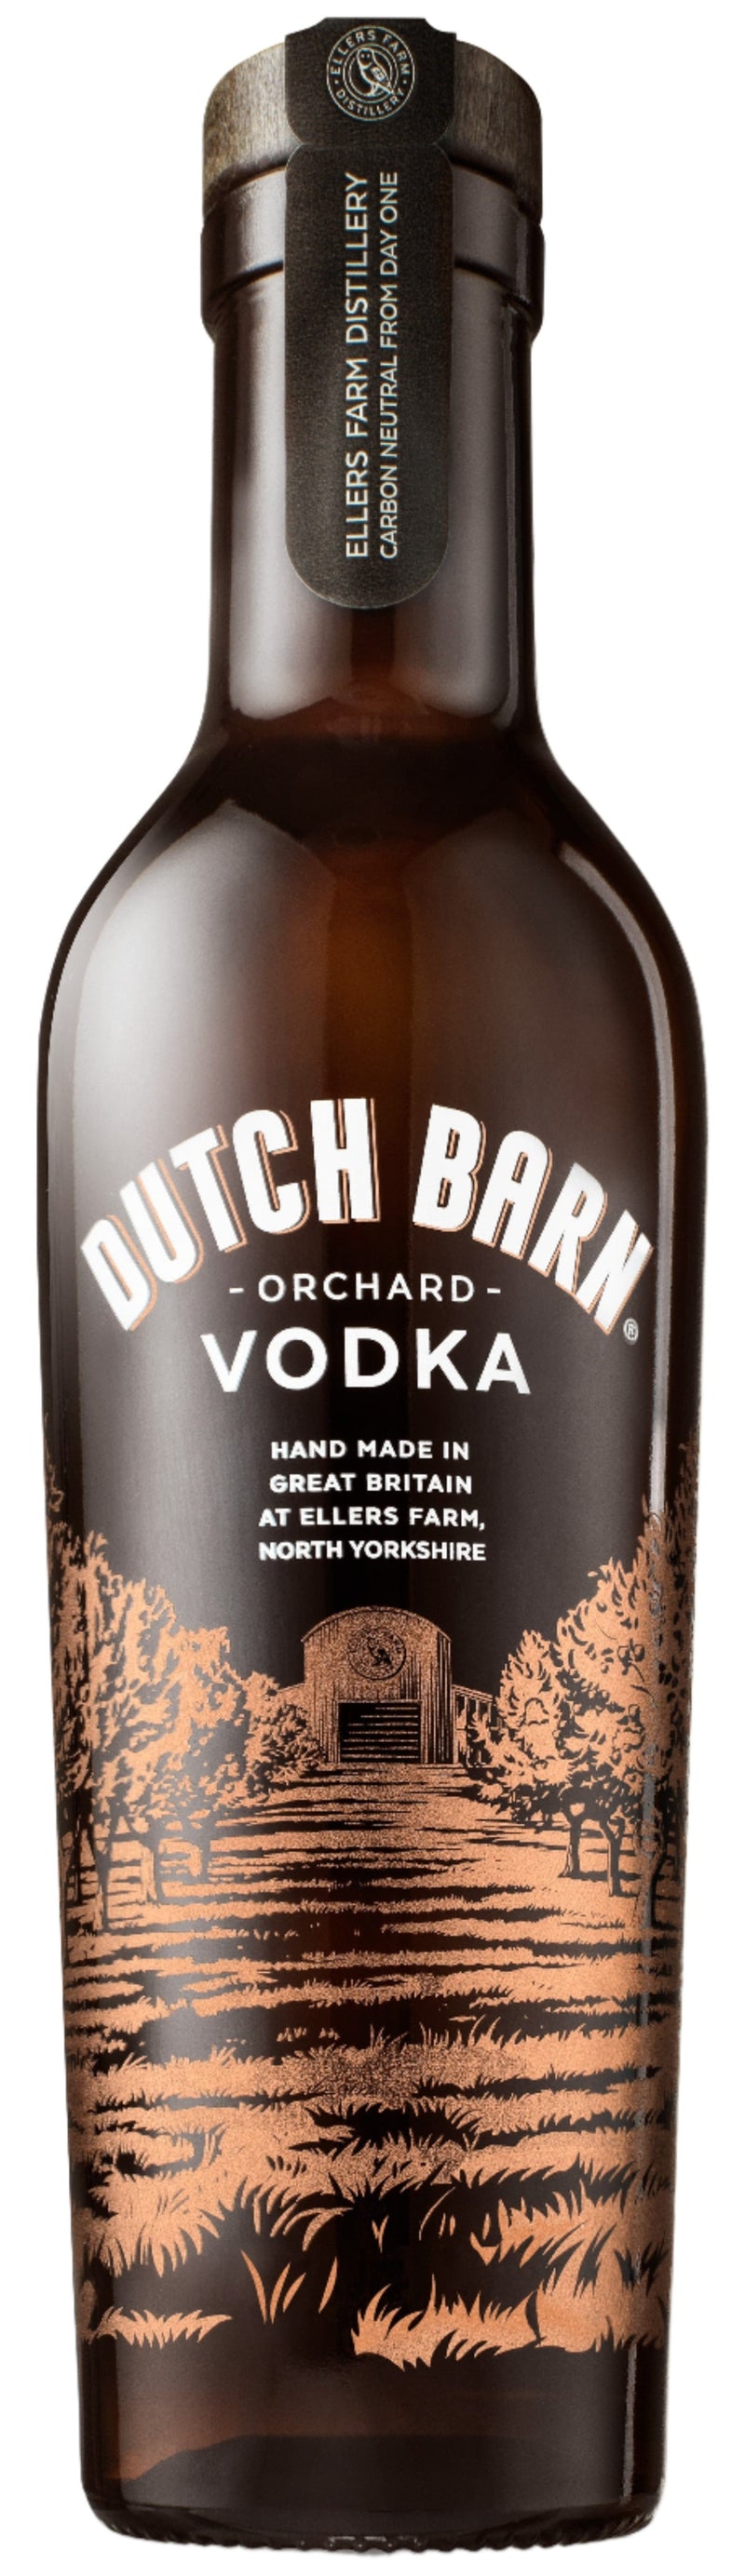 Dutch Barn Vodka 70cl